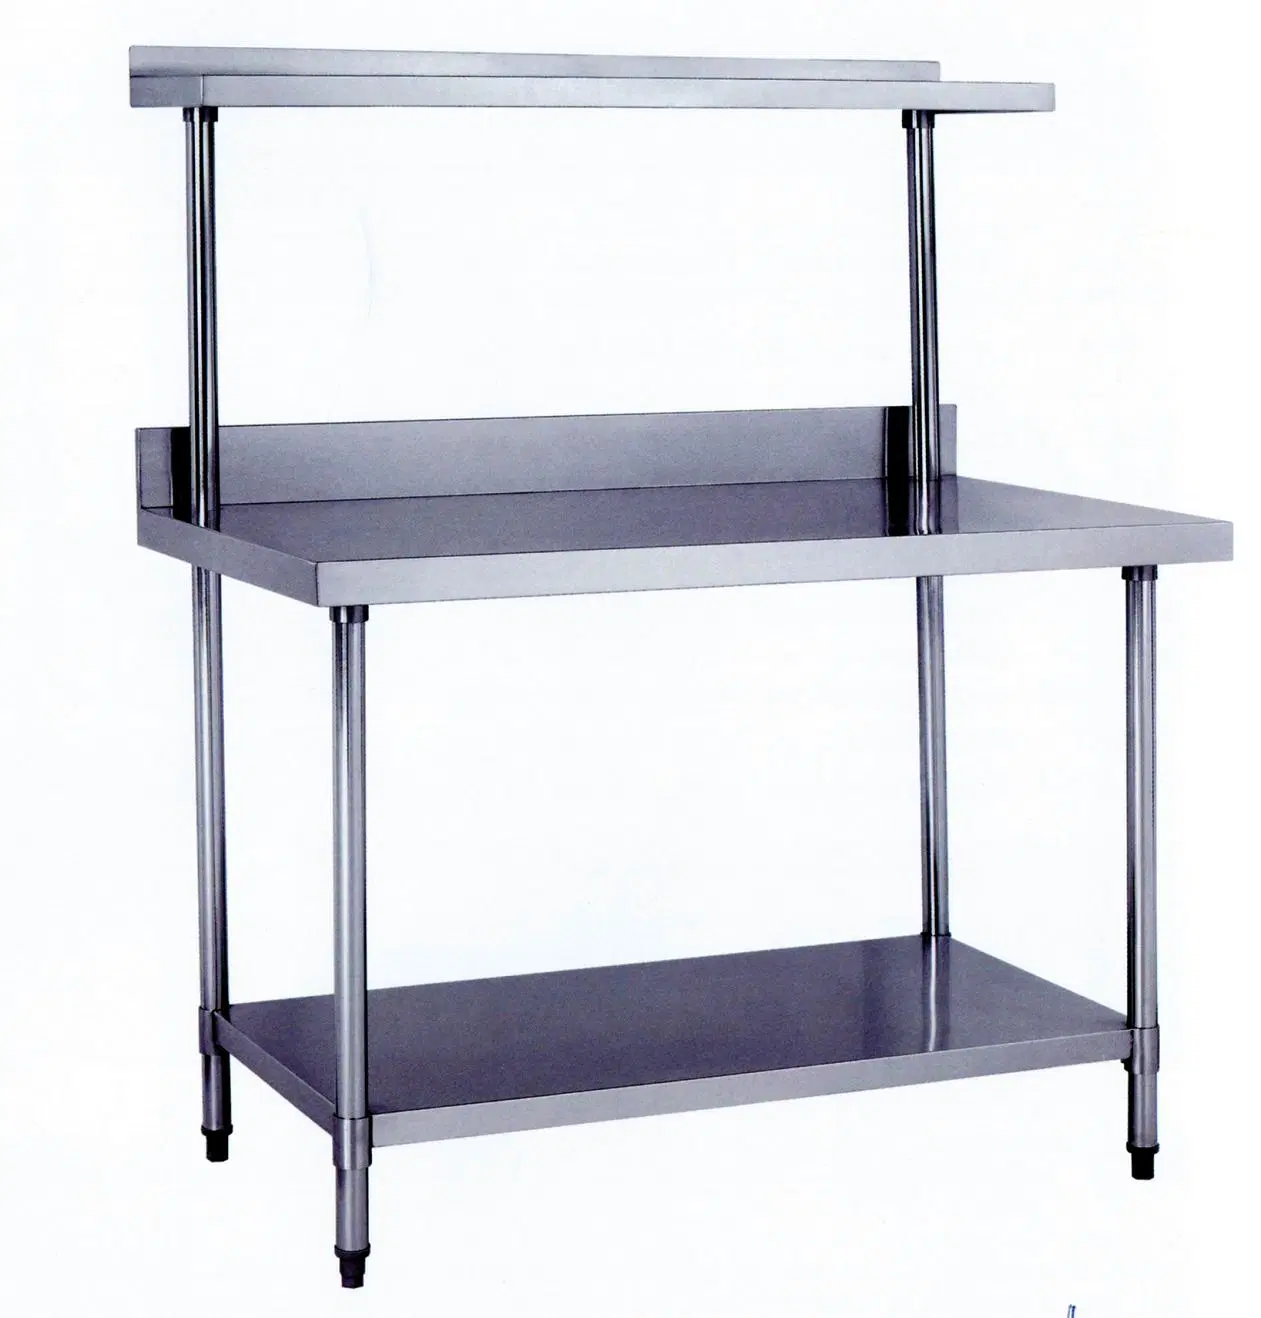 Hot Sale Kitchen Equipment Stainless Steel Work Table for Restaurant 201/304 Stainless Steel Kitchen Table